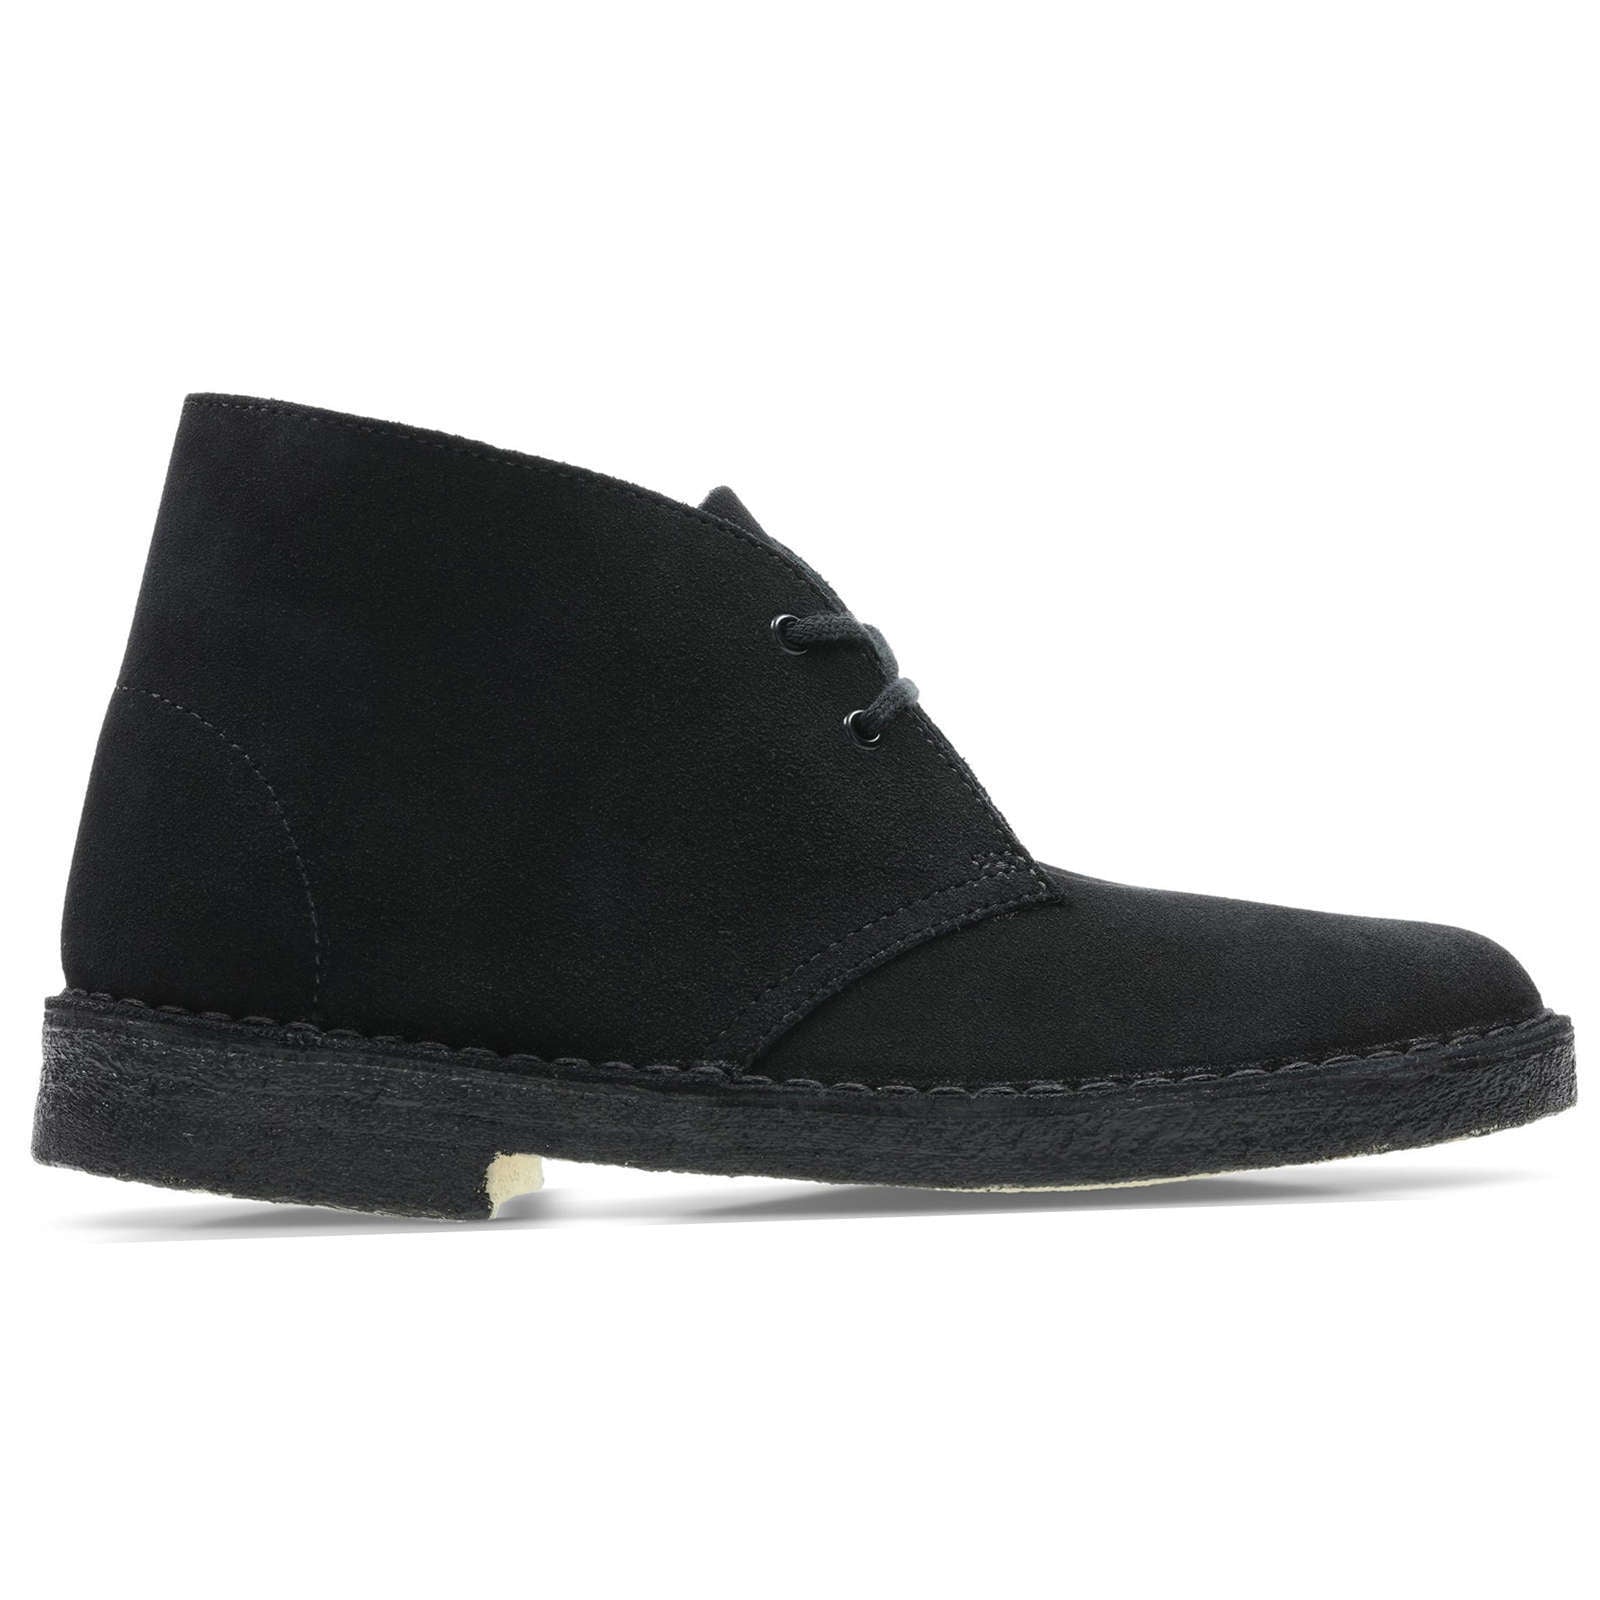 Clarks Originals Desert Boot Suede Leather Women's Boots#color_black